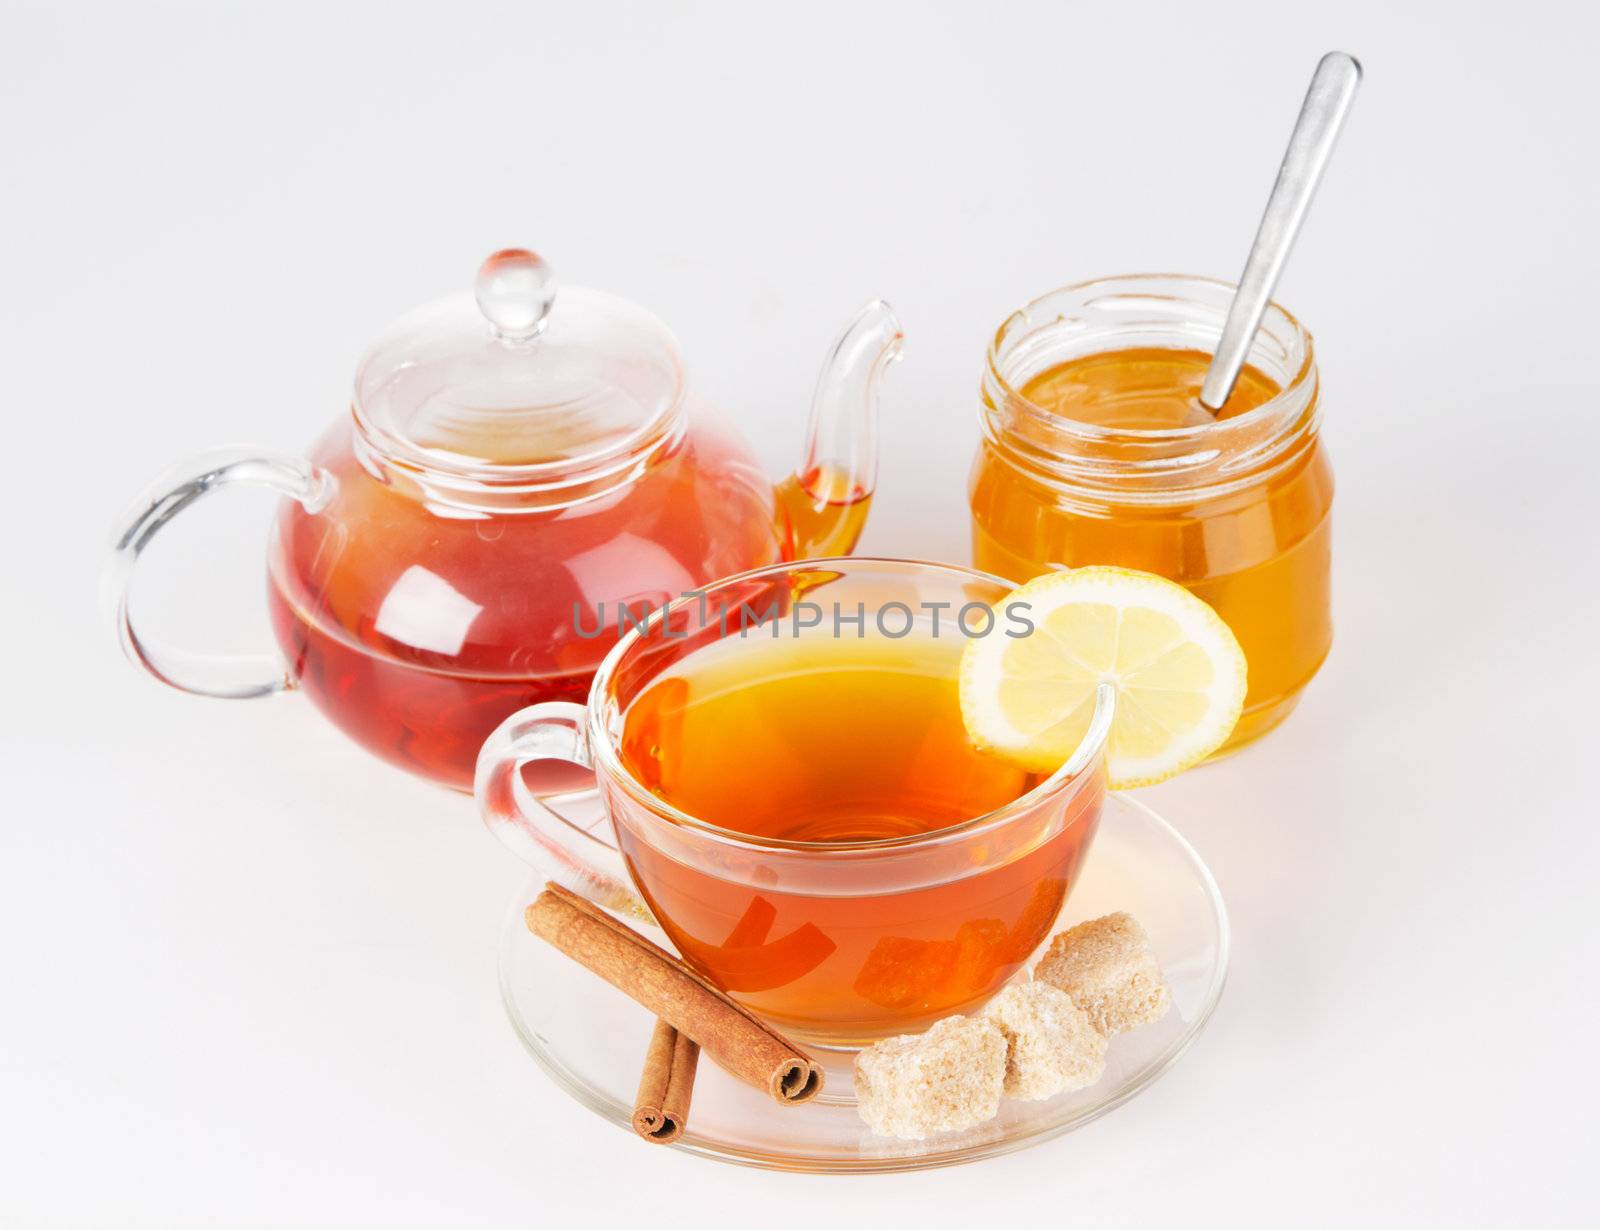 Tea with honey, lemon and cinnamon